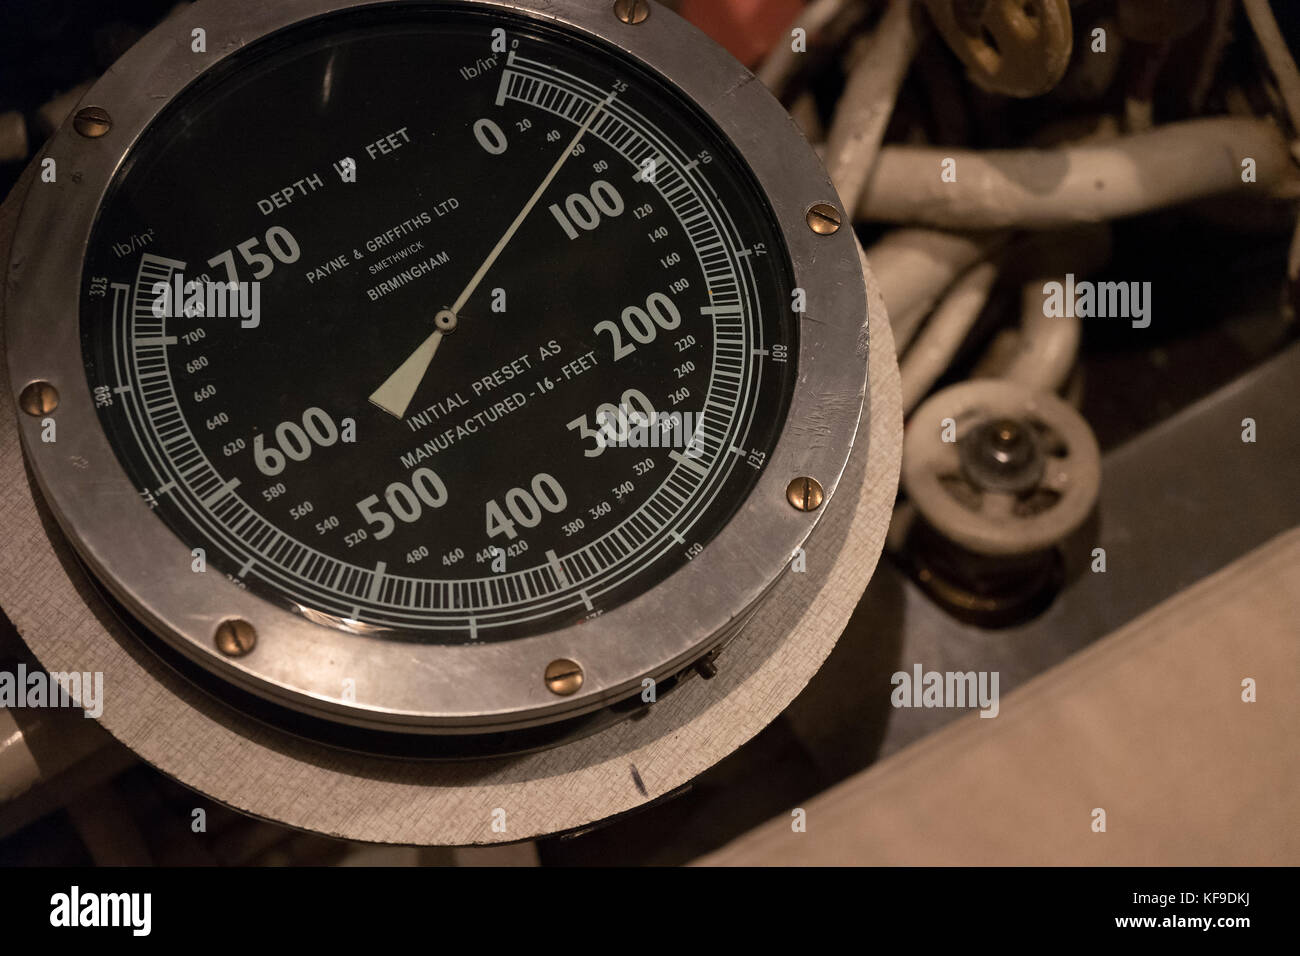 Depth gauge on submarine HMS Alliance at Gosport Royal Navy museum. Stock Photo